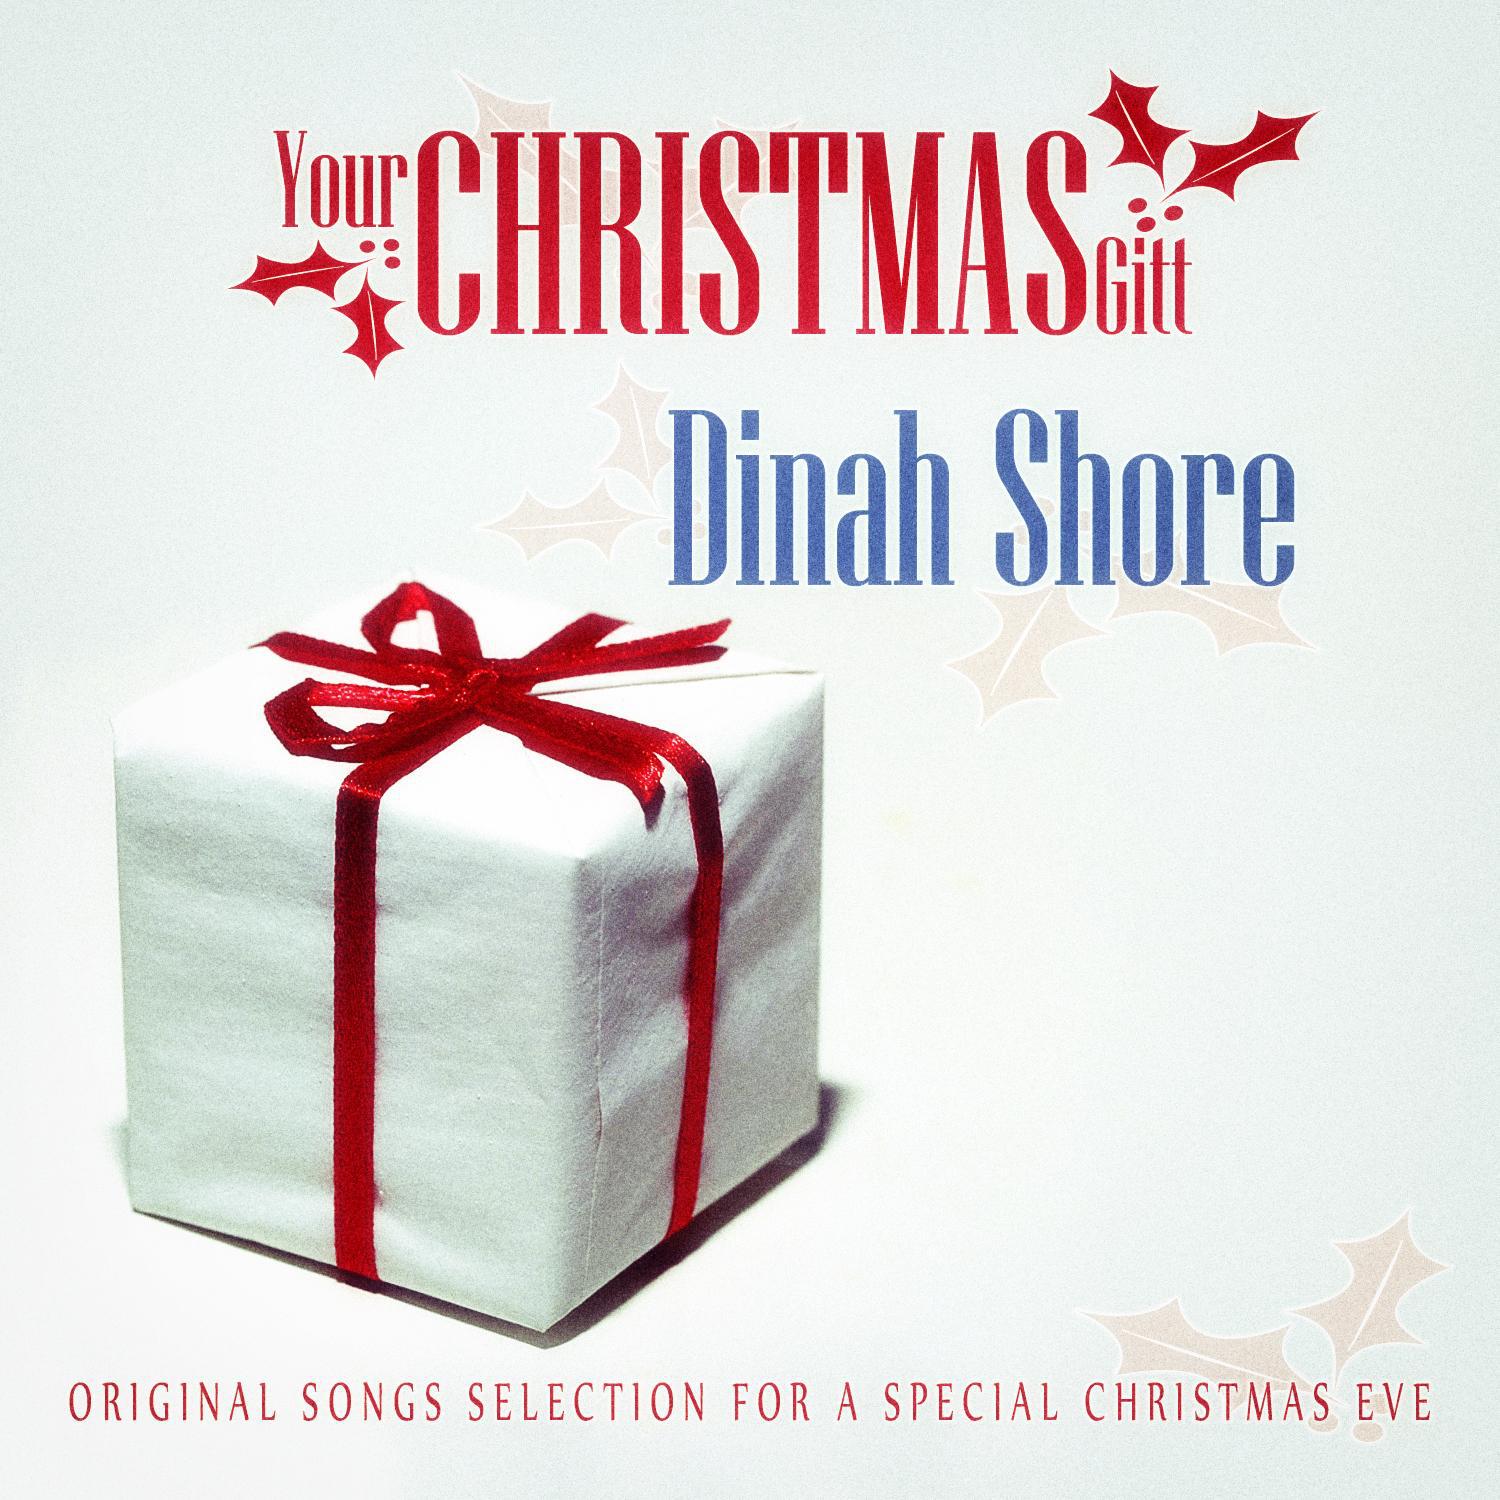 Your Christmas Gift: Dinah Shore